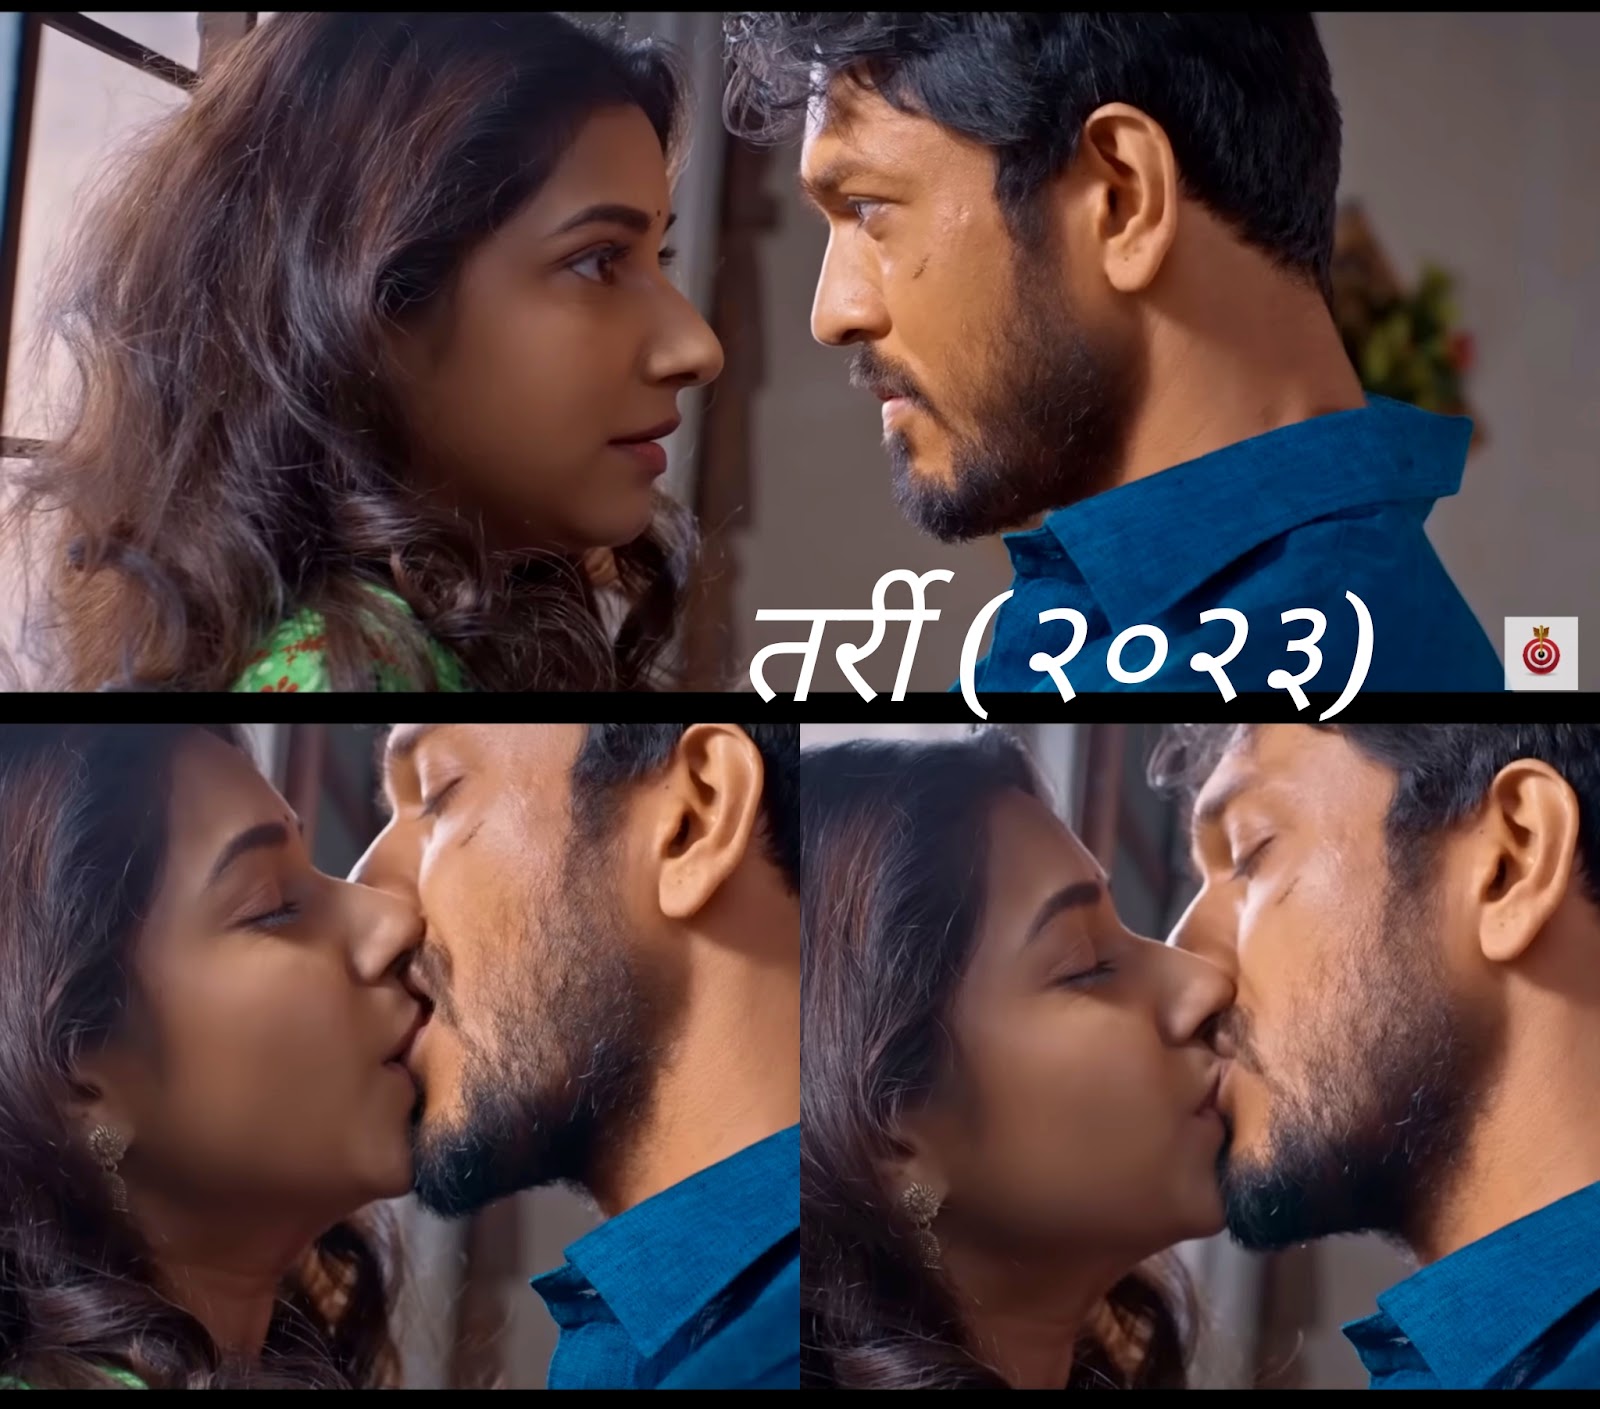 lalit prabhakar kissing gauri nalawade